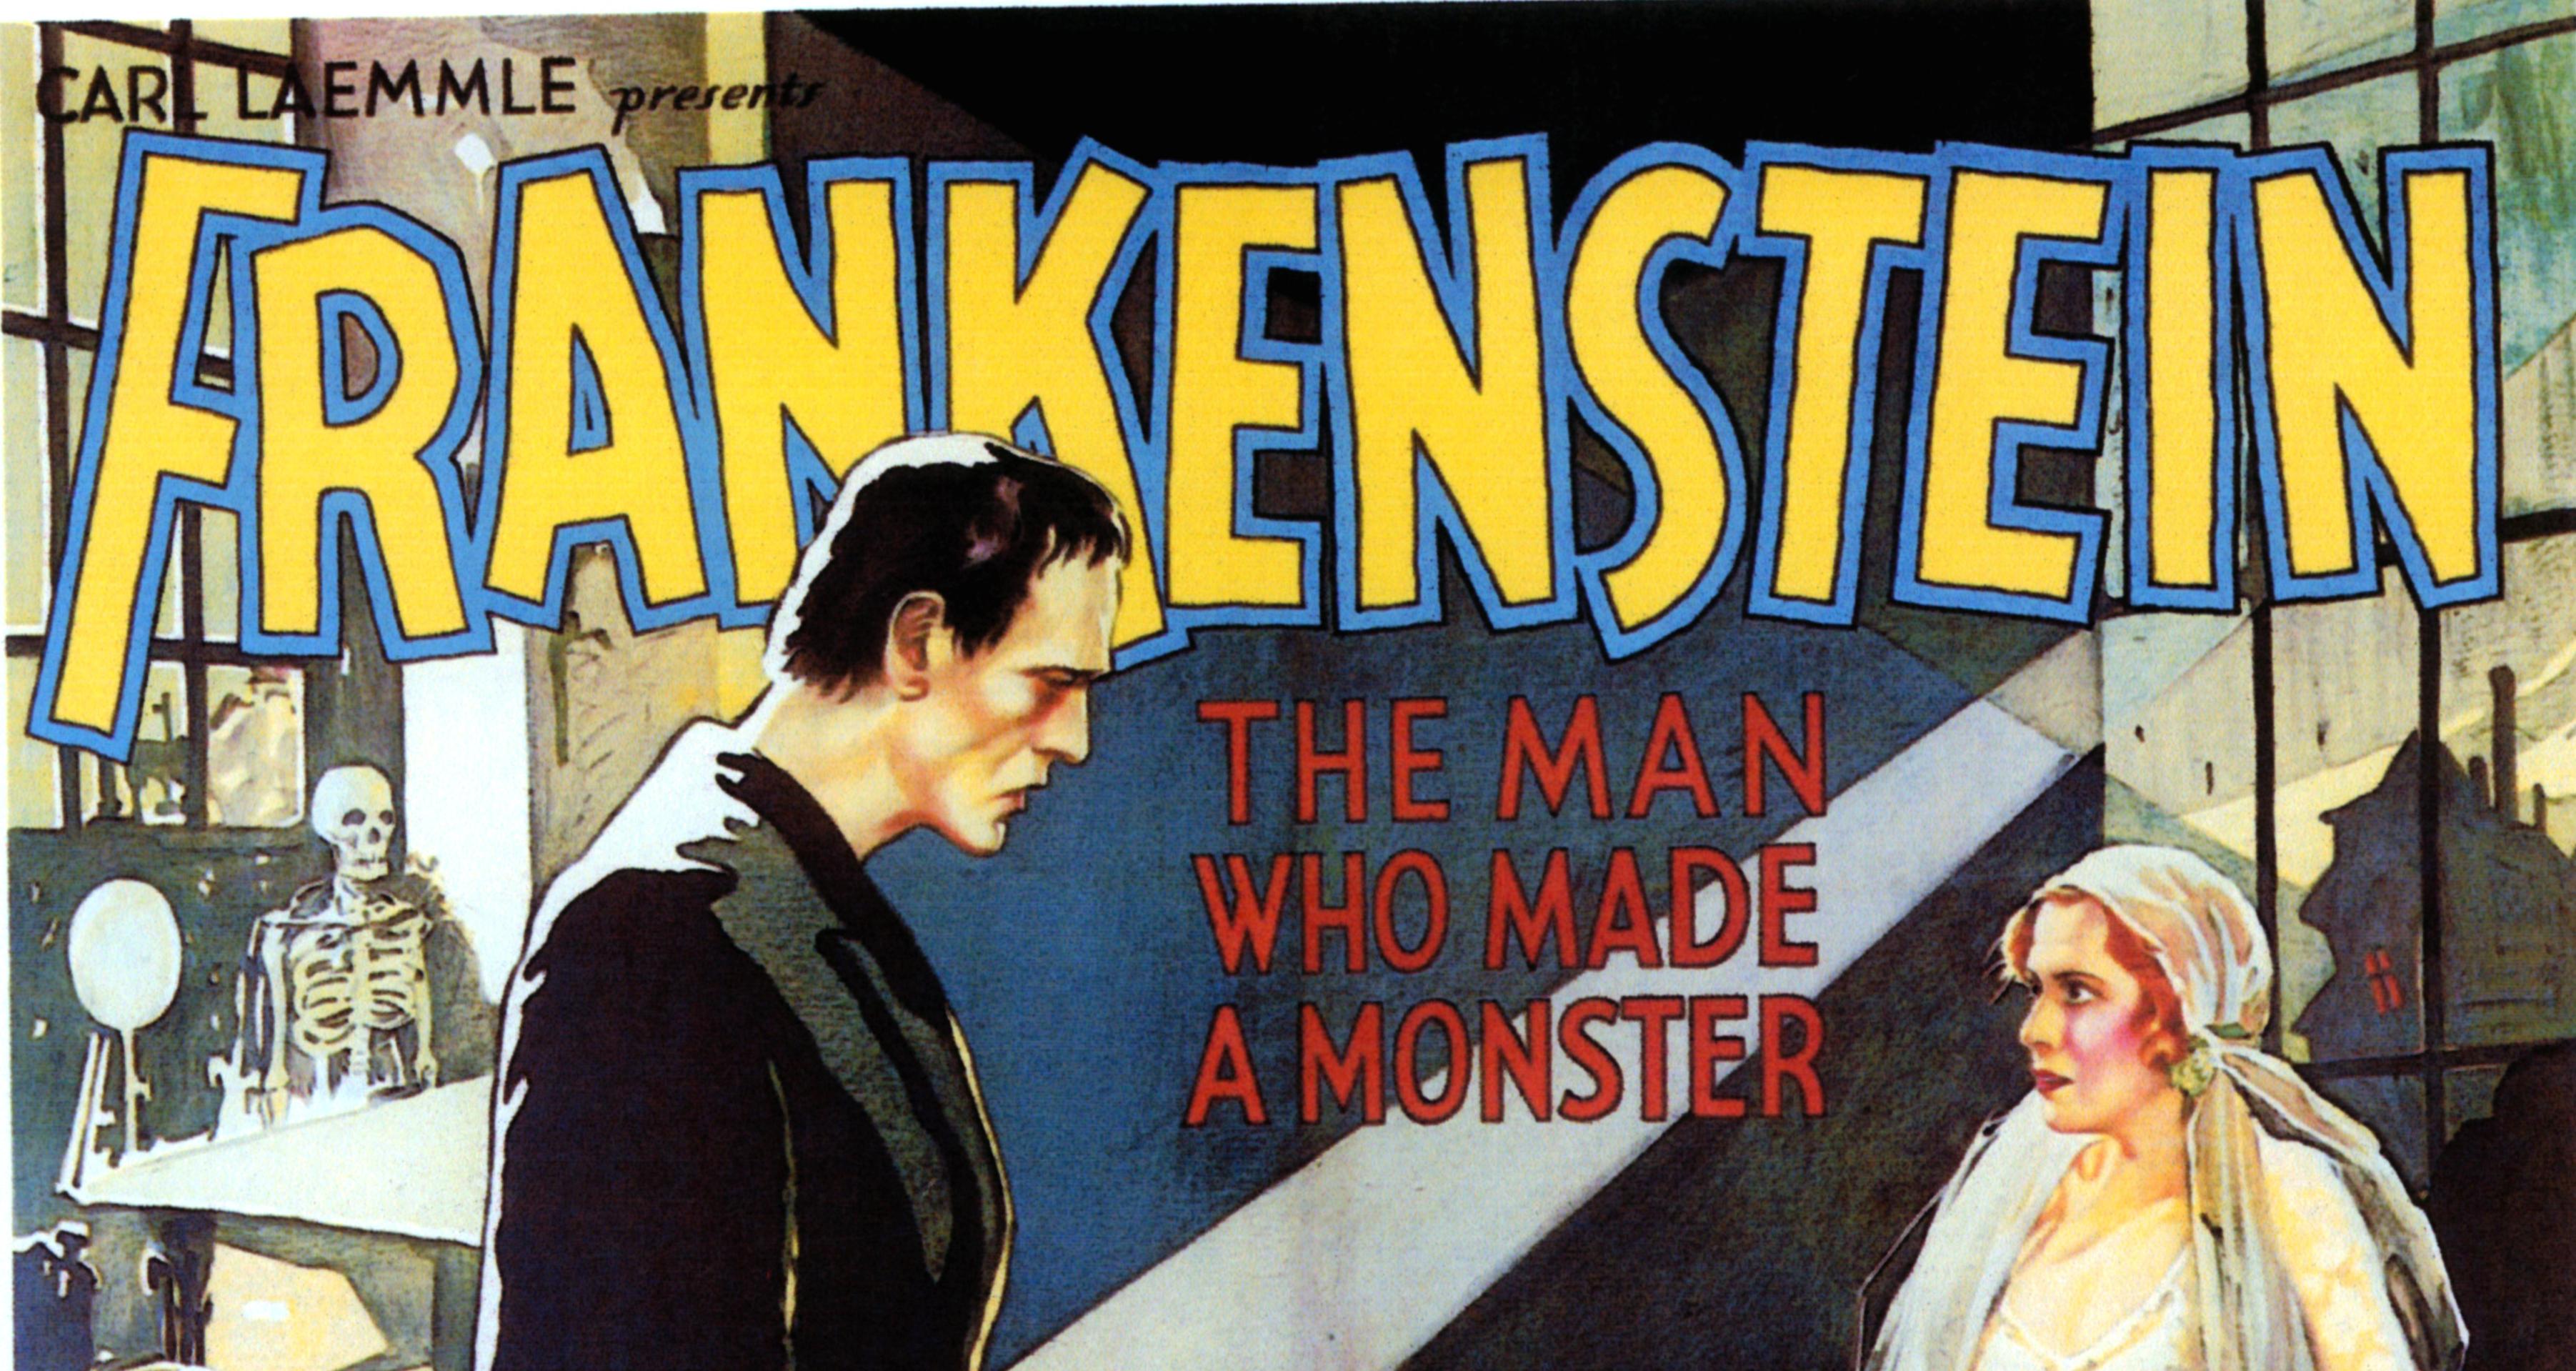 'Frankenstein' 1931 poster